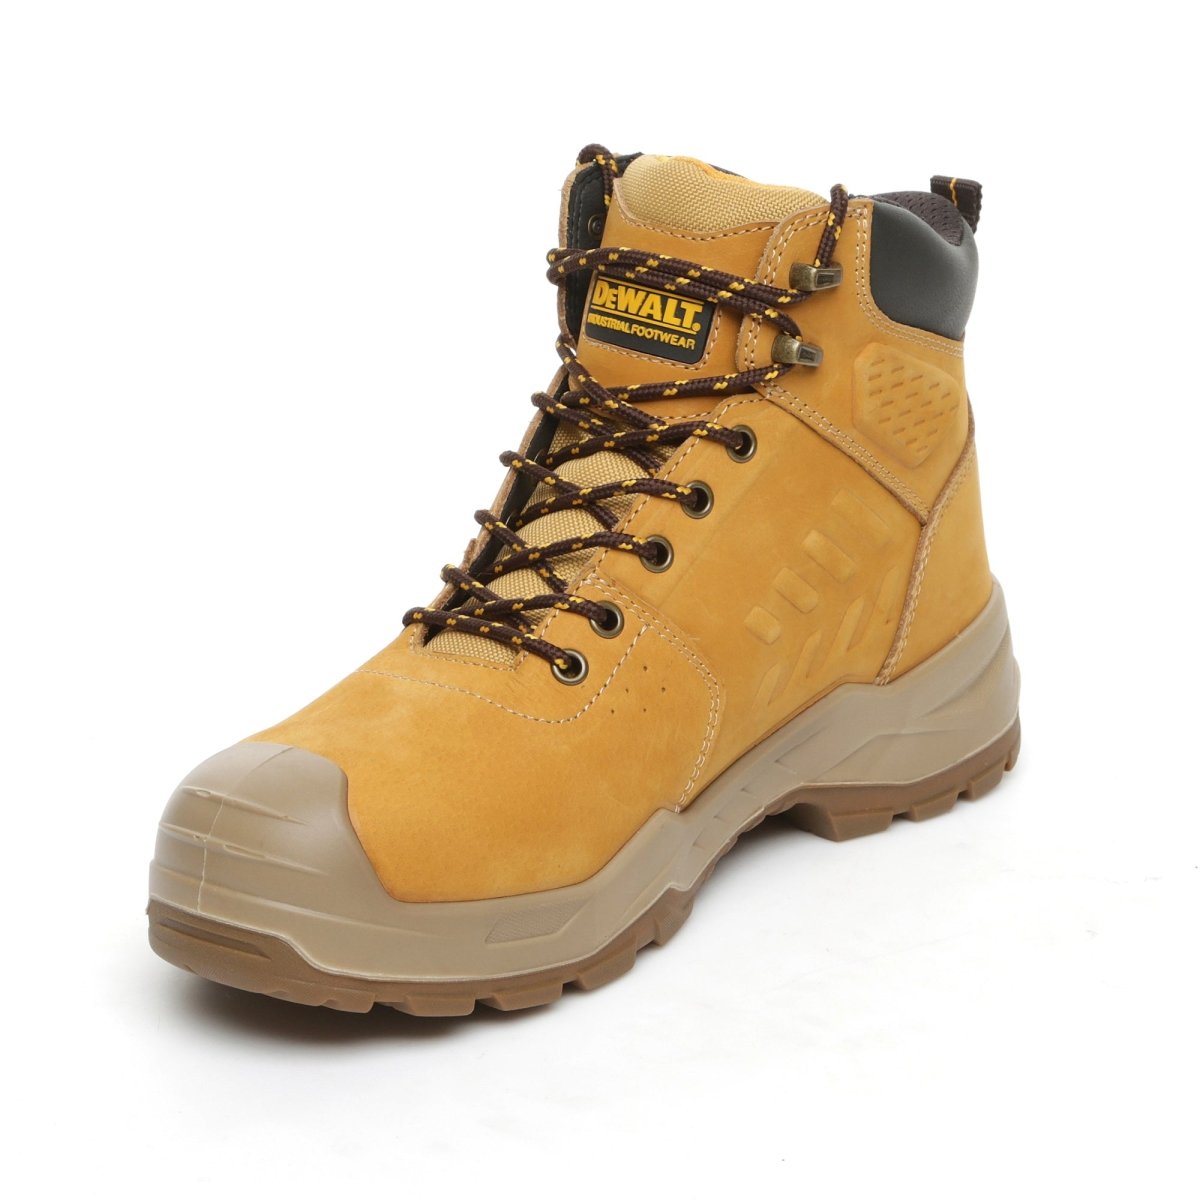 DeWalt Mentor S7 Waterproof Safety Hiker Boot - Shoe Store Direct